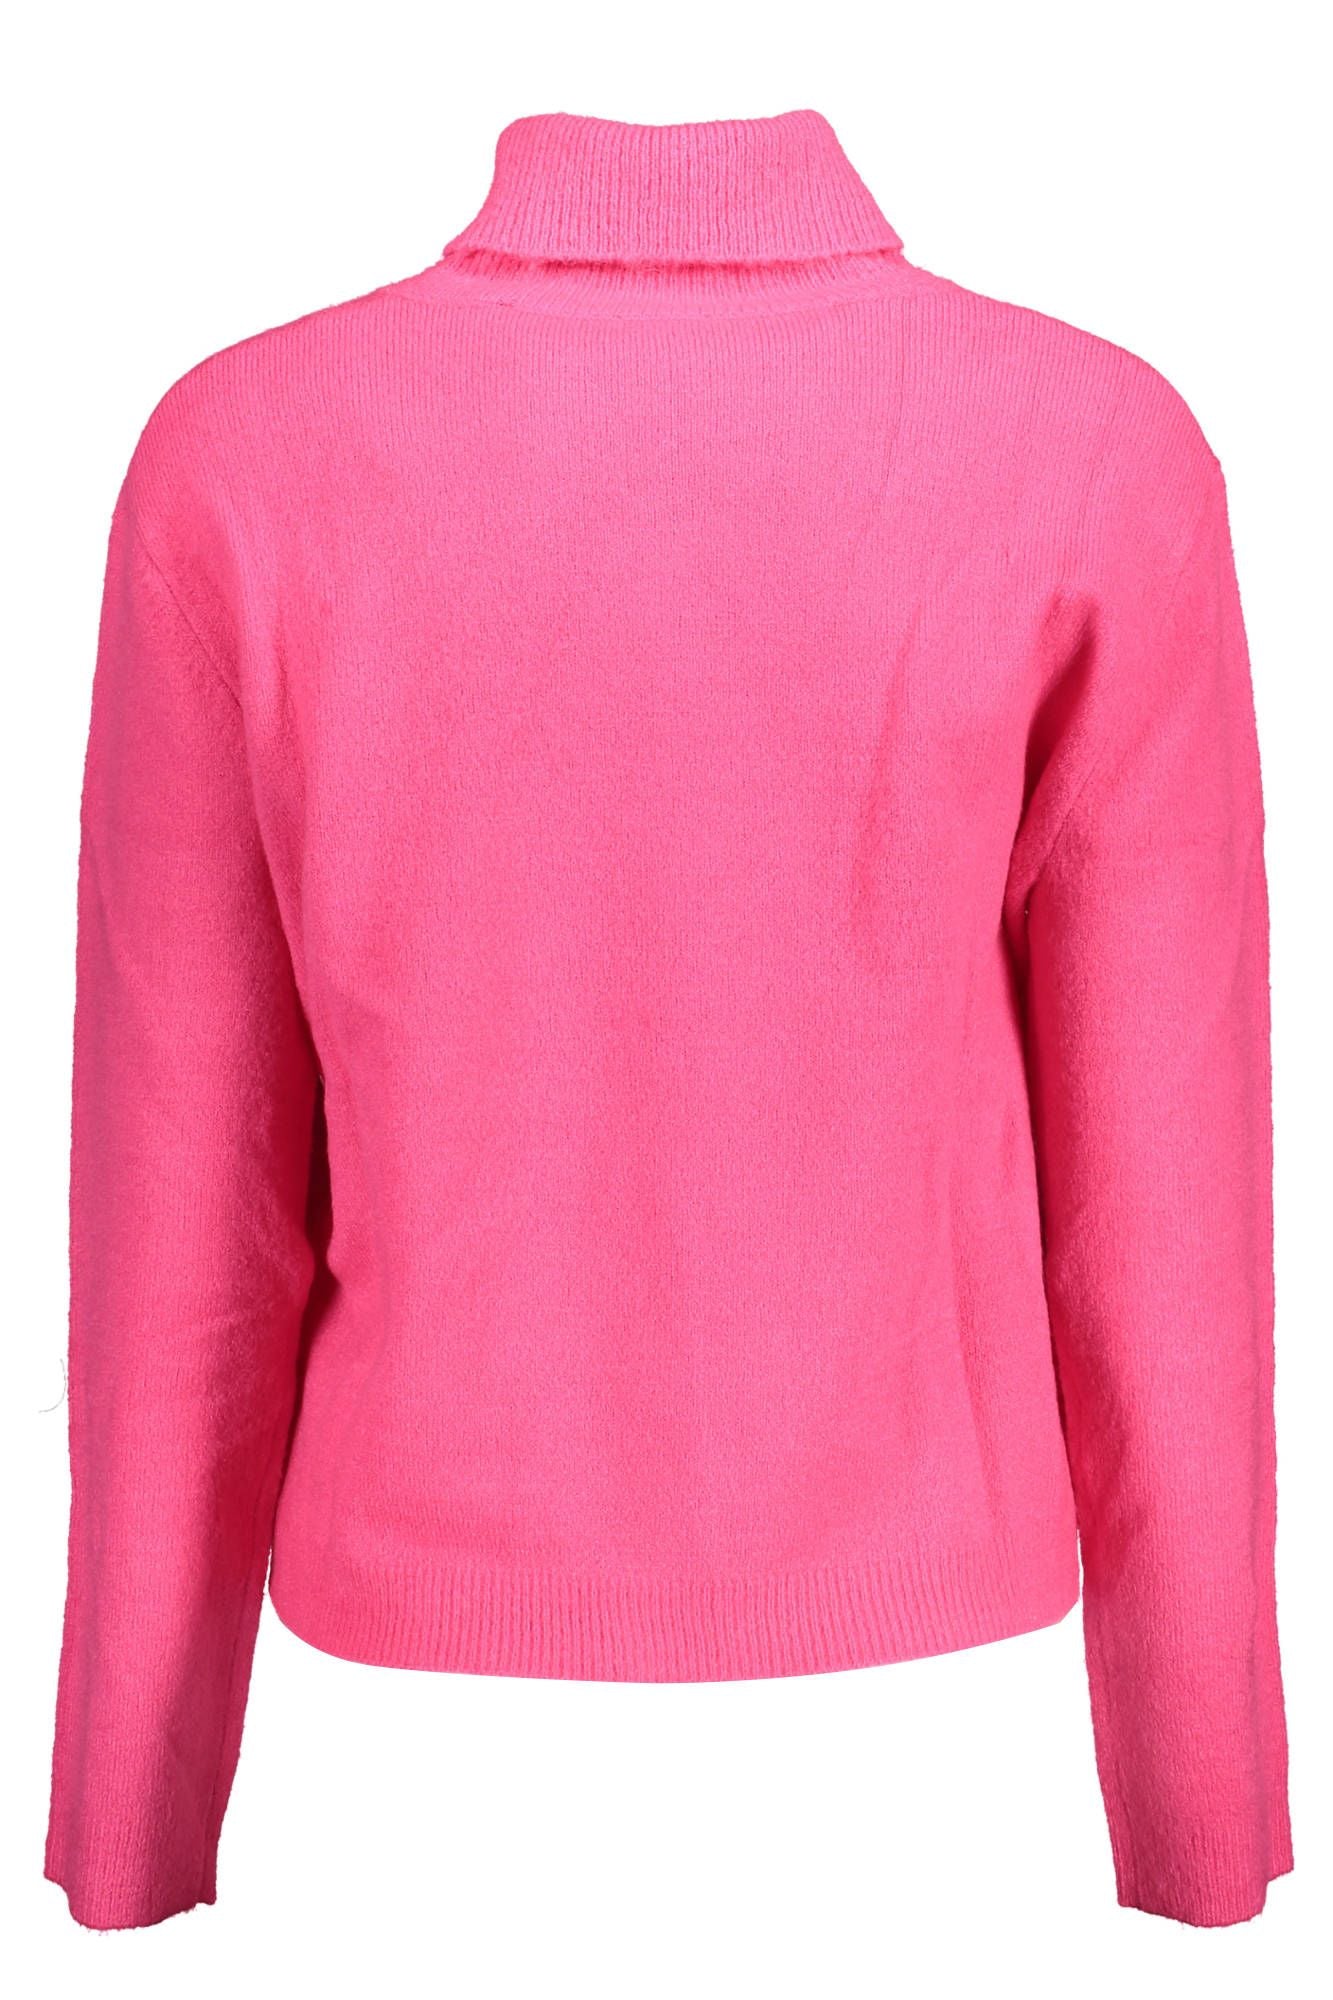 U.S. Polo Assn. Women's Pink Nylon Turtleneck Sweater